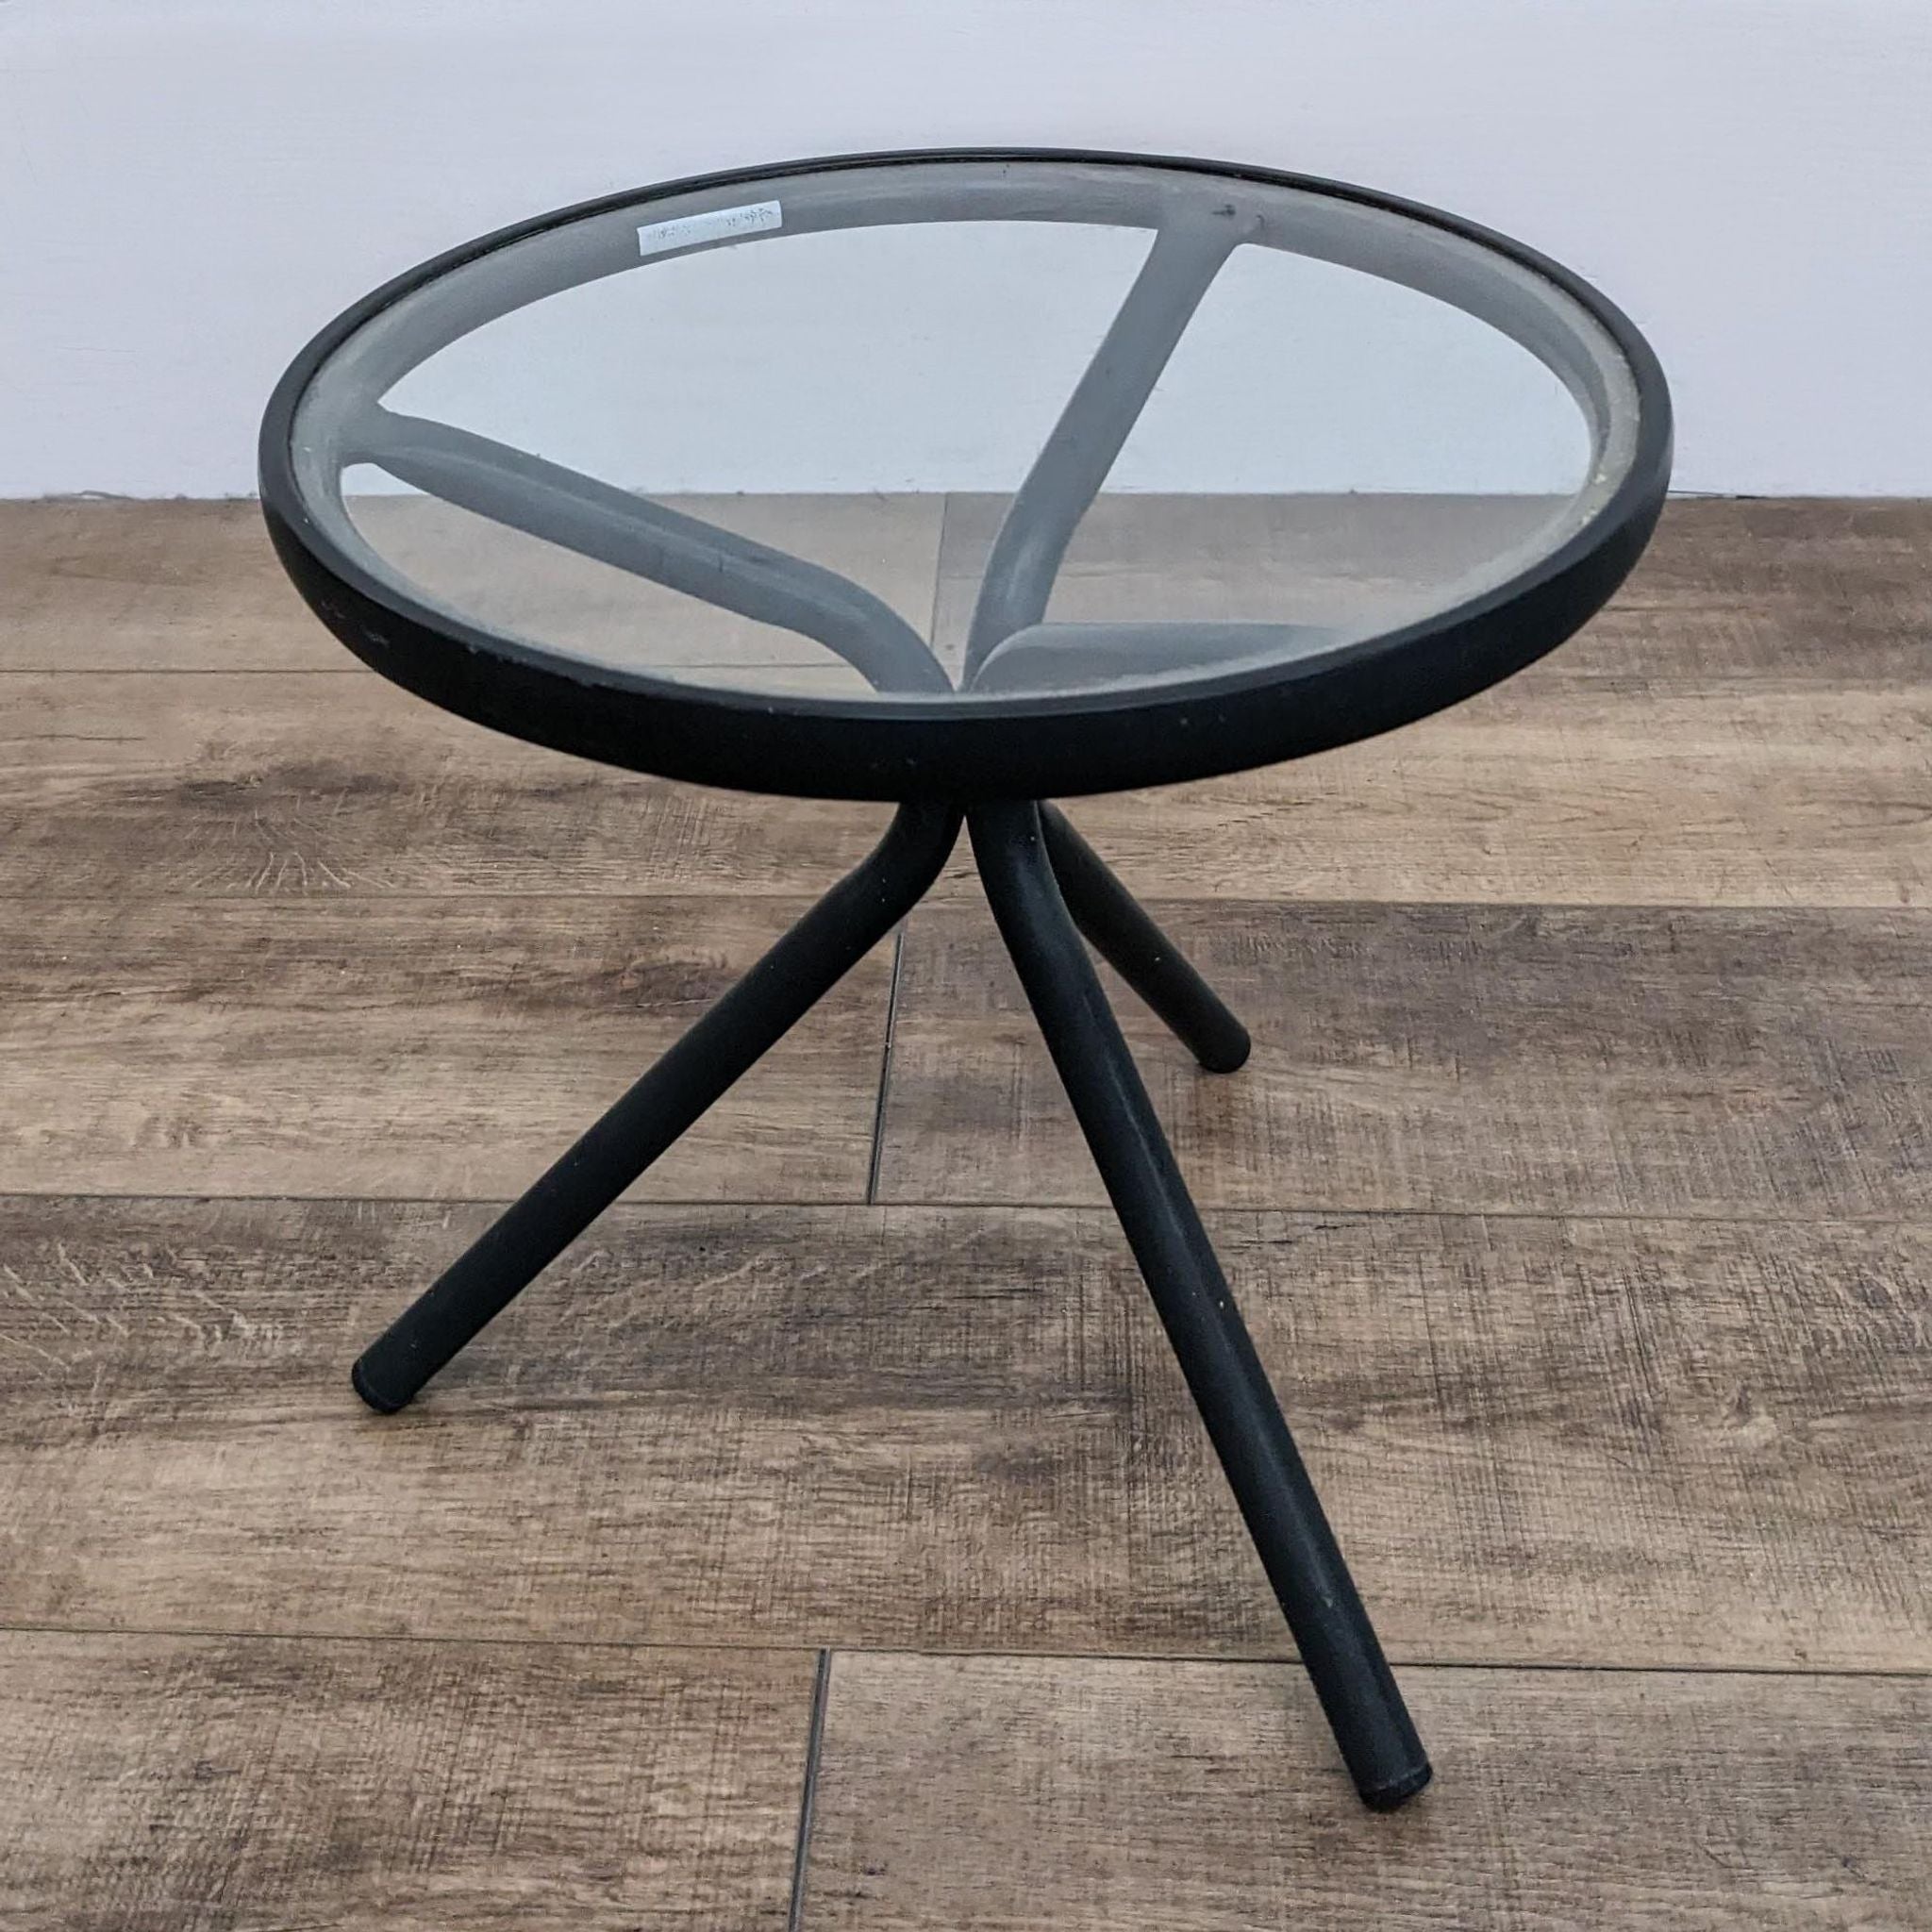 Three-legged Brown Jordan designer glass top table, 18 inches, with an aluminum frame against a plain backdrop.